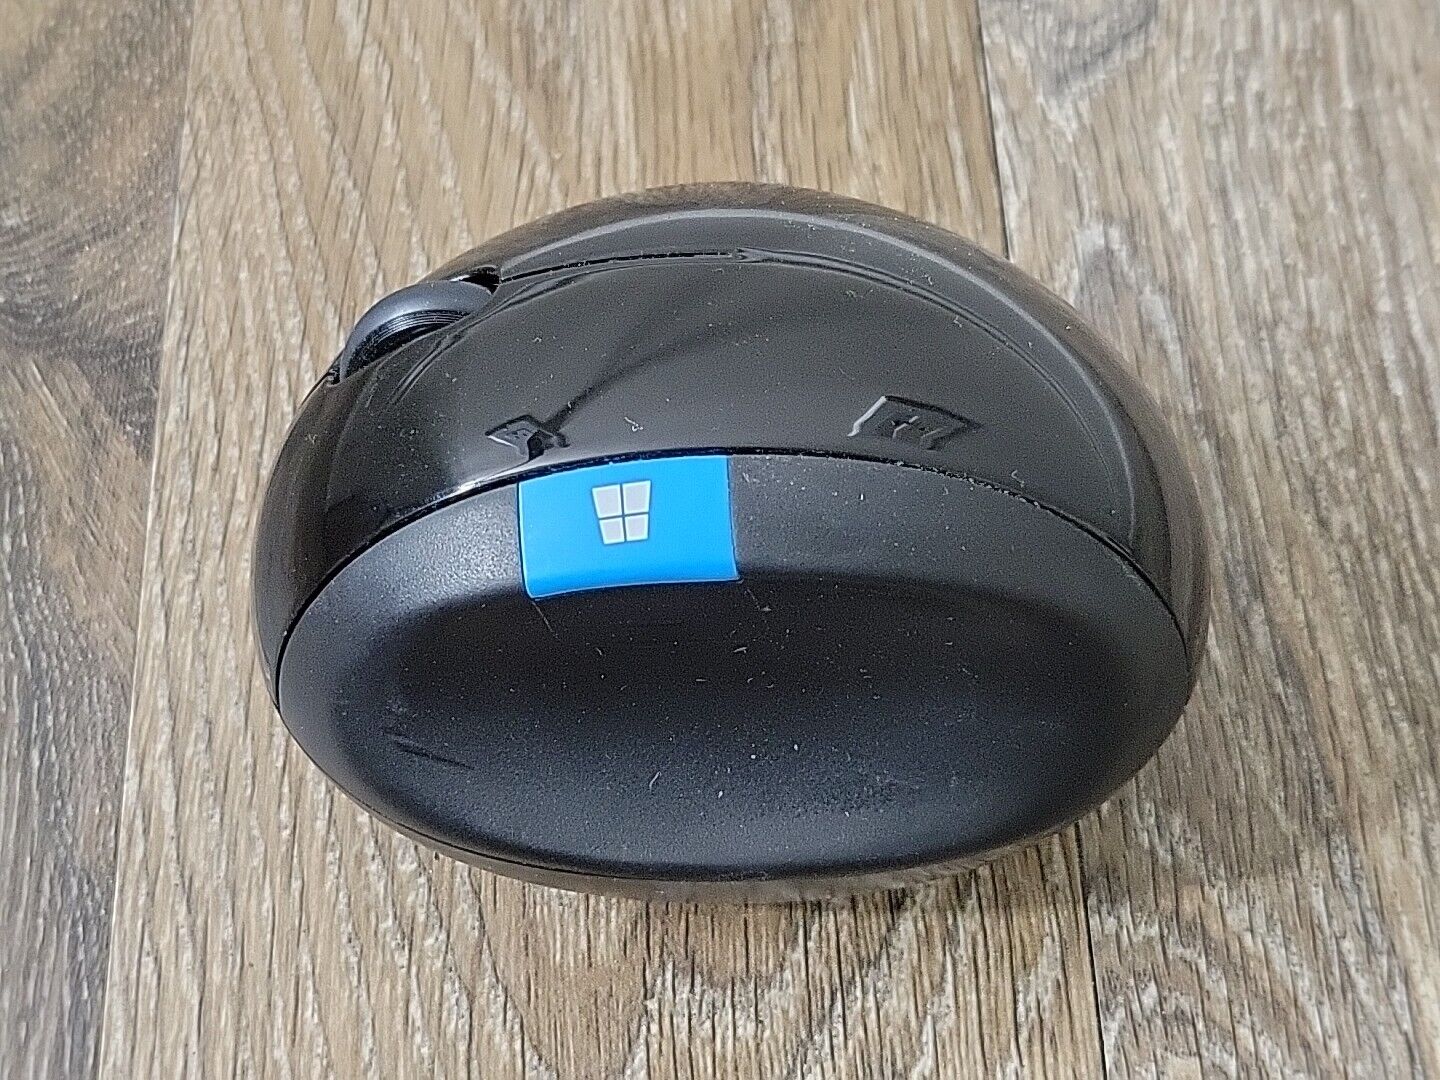 Microsoft Sculpt 1560 Wireless Ergonomic Mouse WiFi With USB Dongle